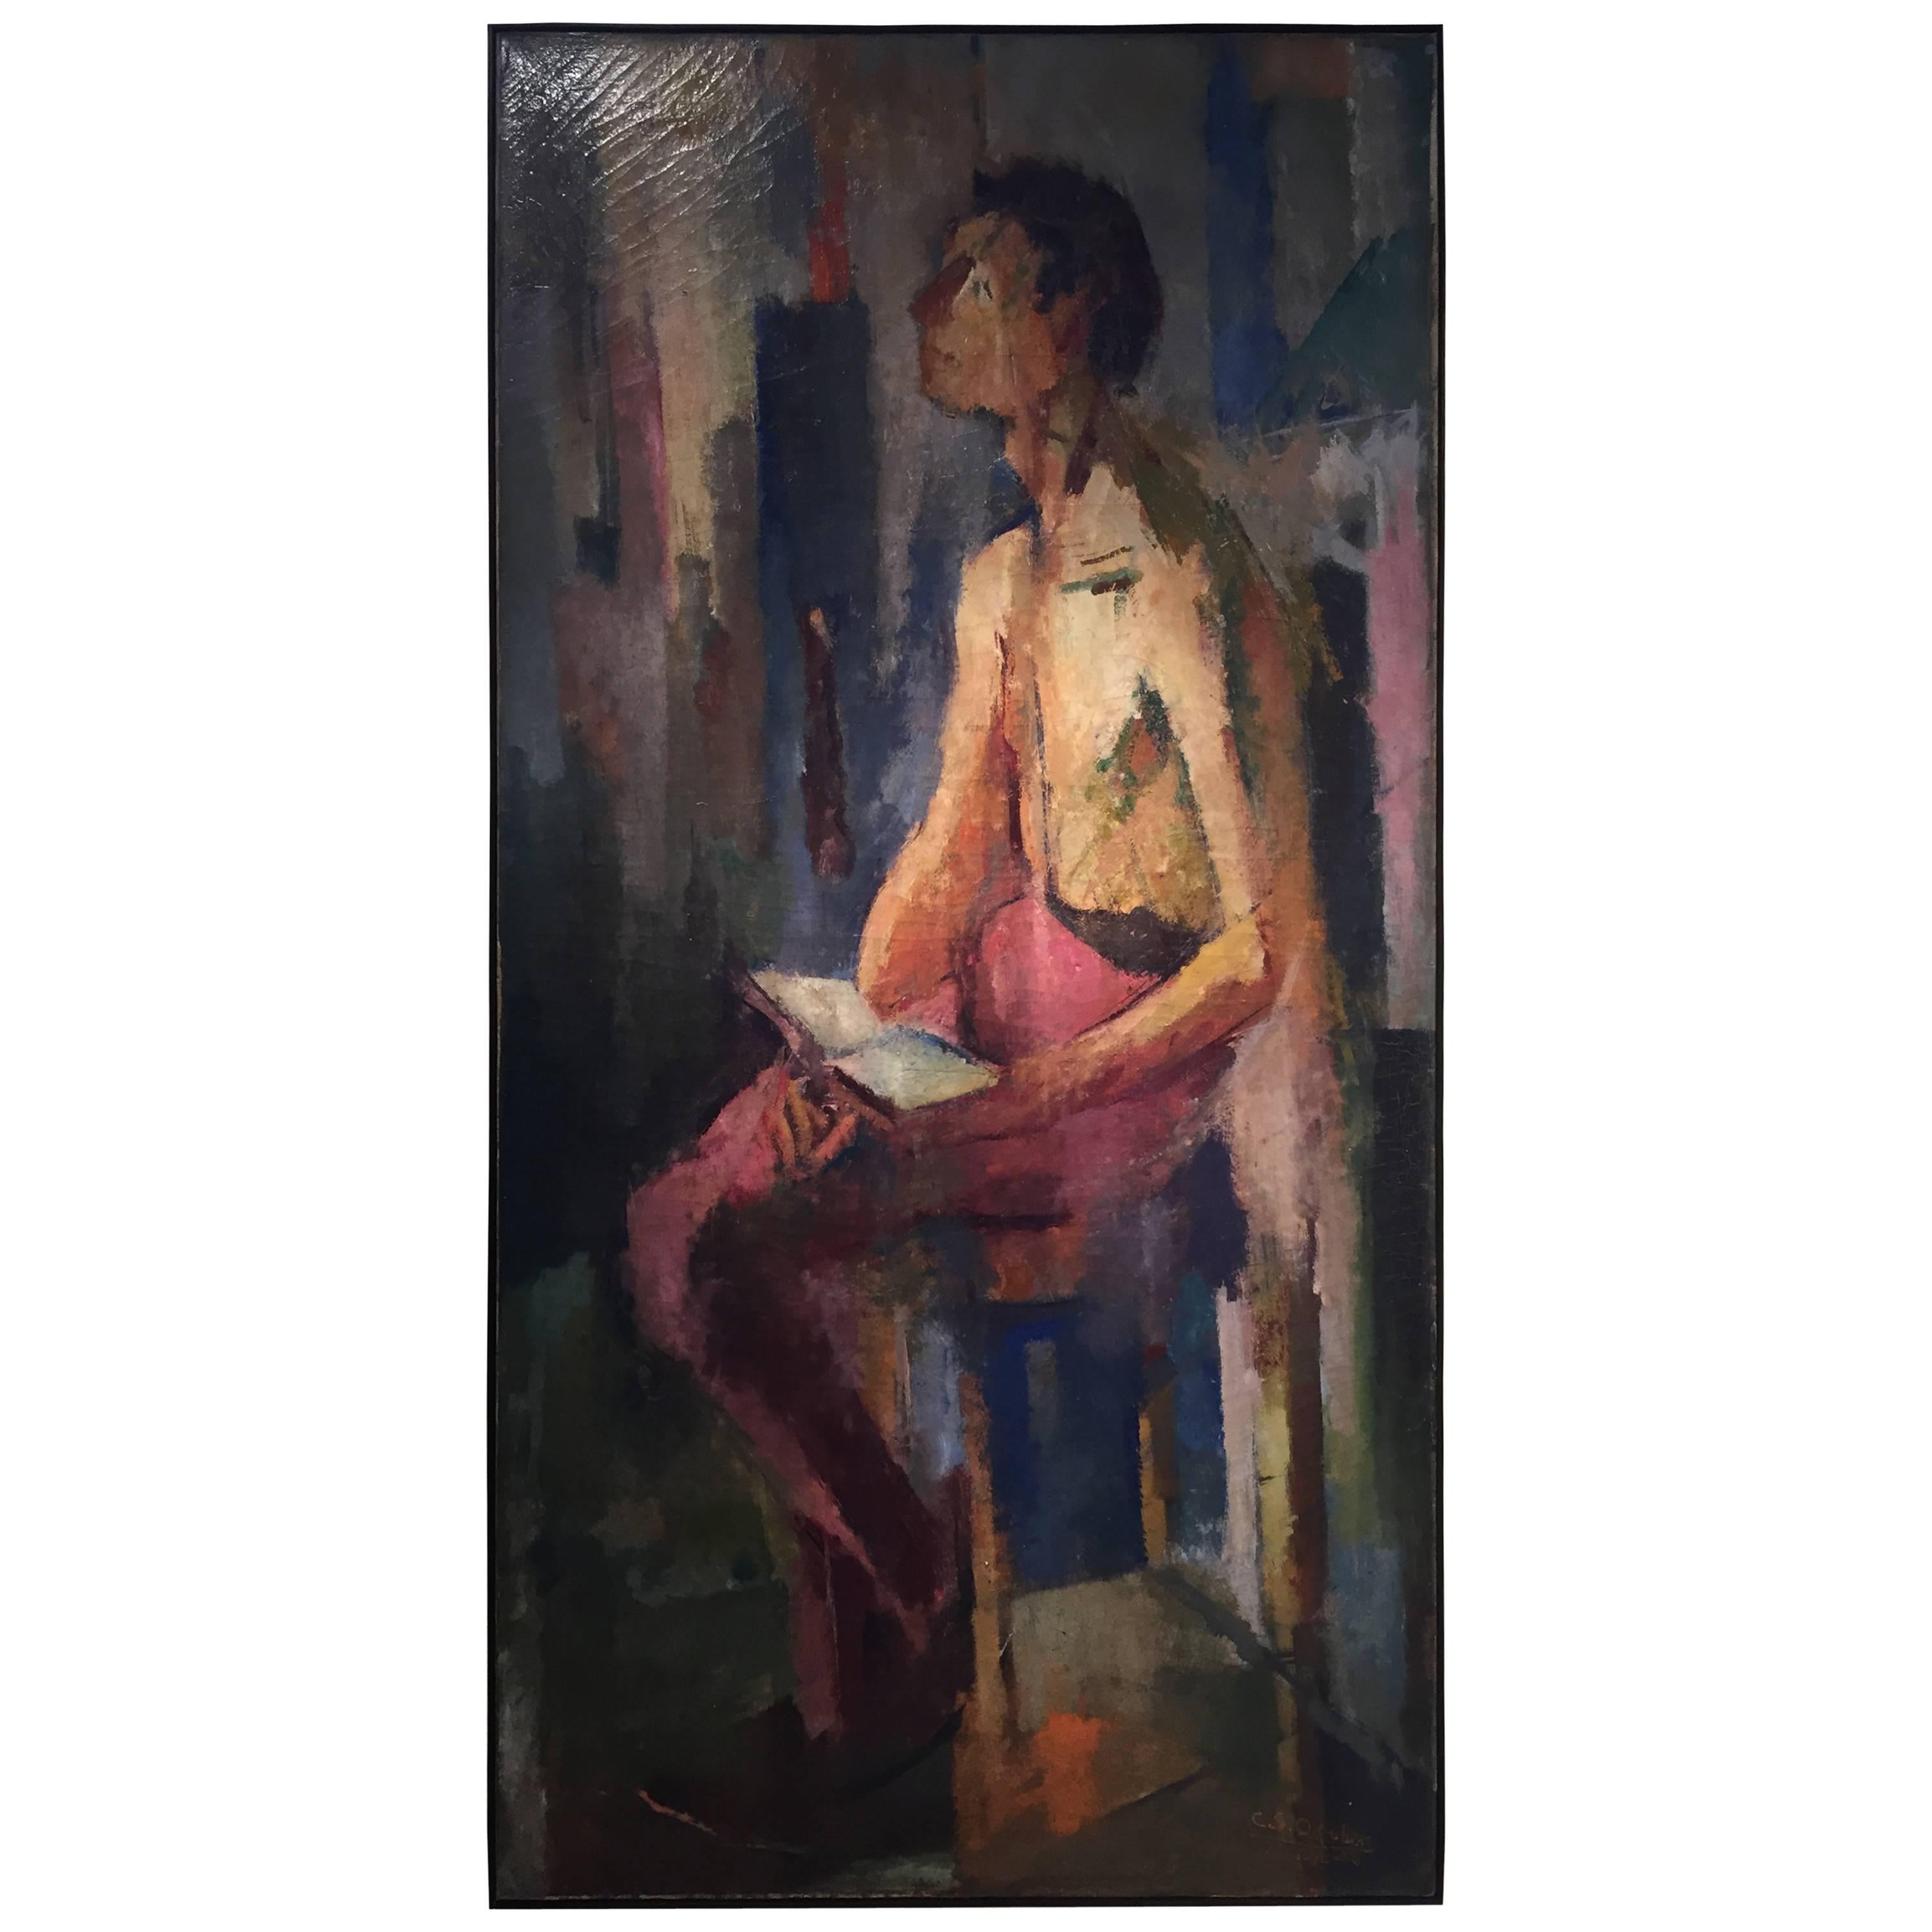 Ciro Oduber Arosemena Painting "Seated Man"